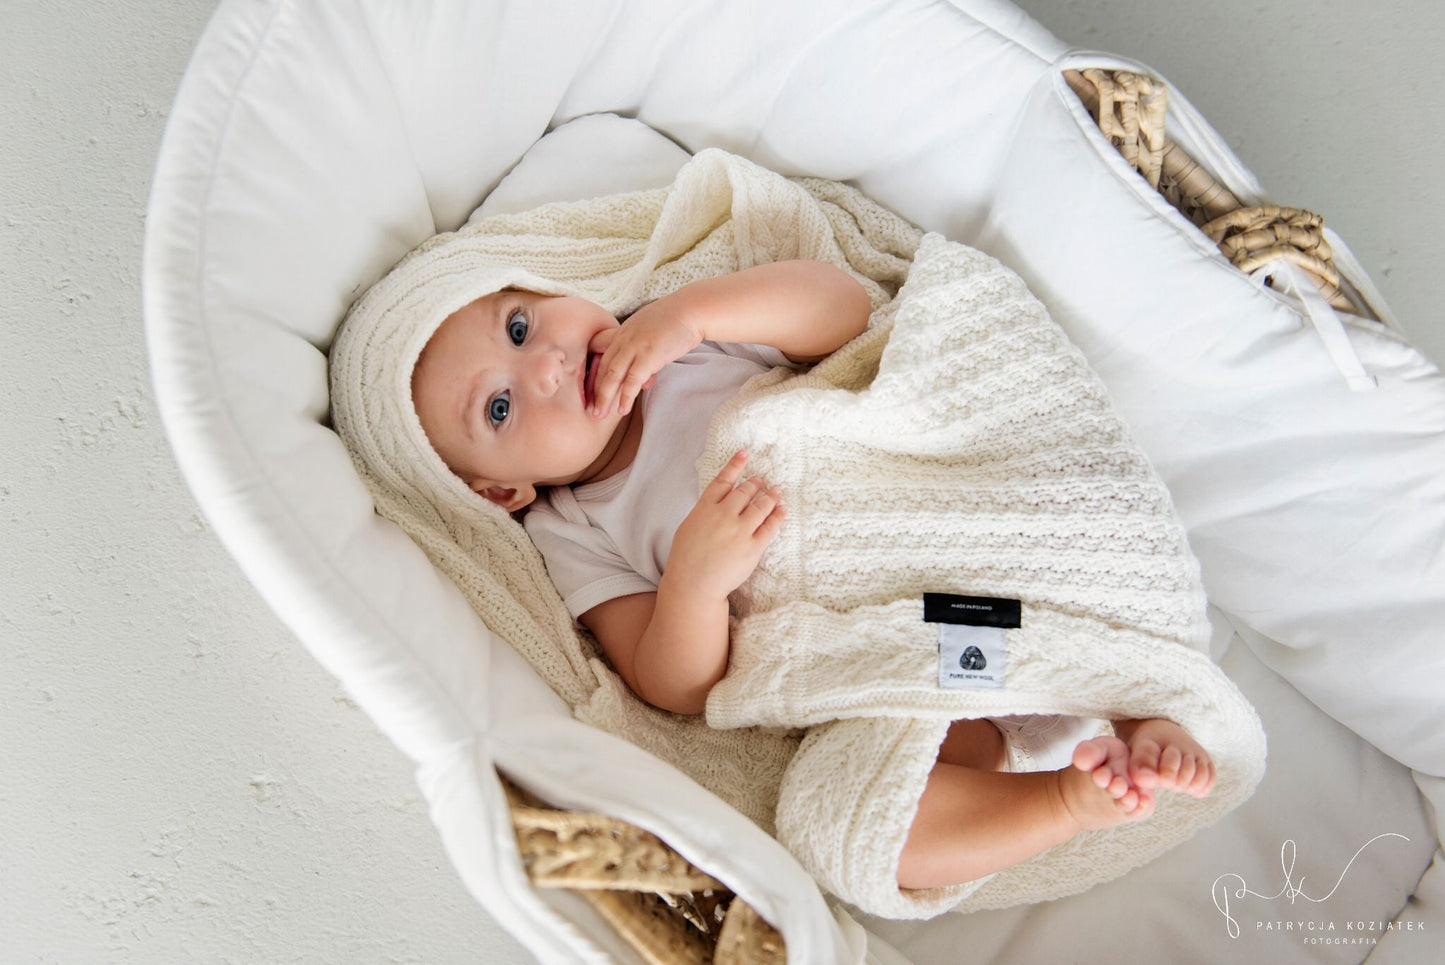 Premium Merino Wool Baby Blanket "Cookie" - Coconut Blanket Lullalove 